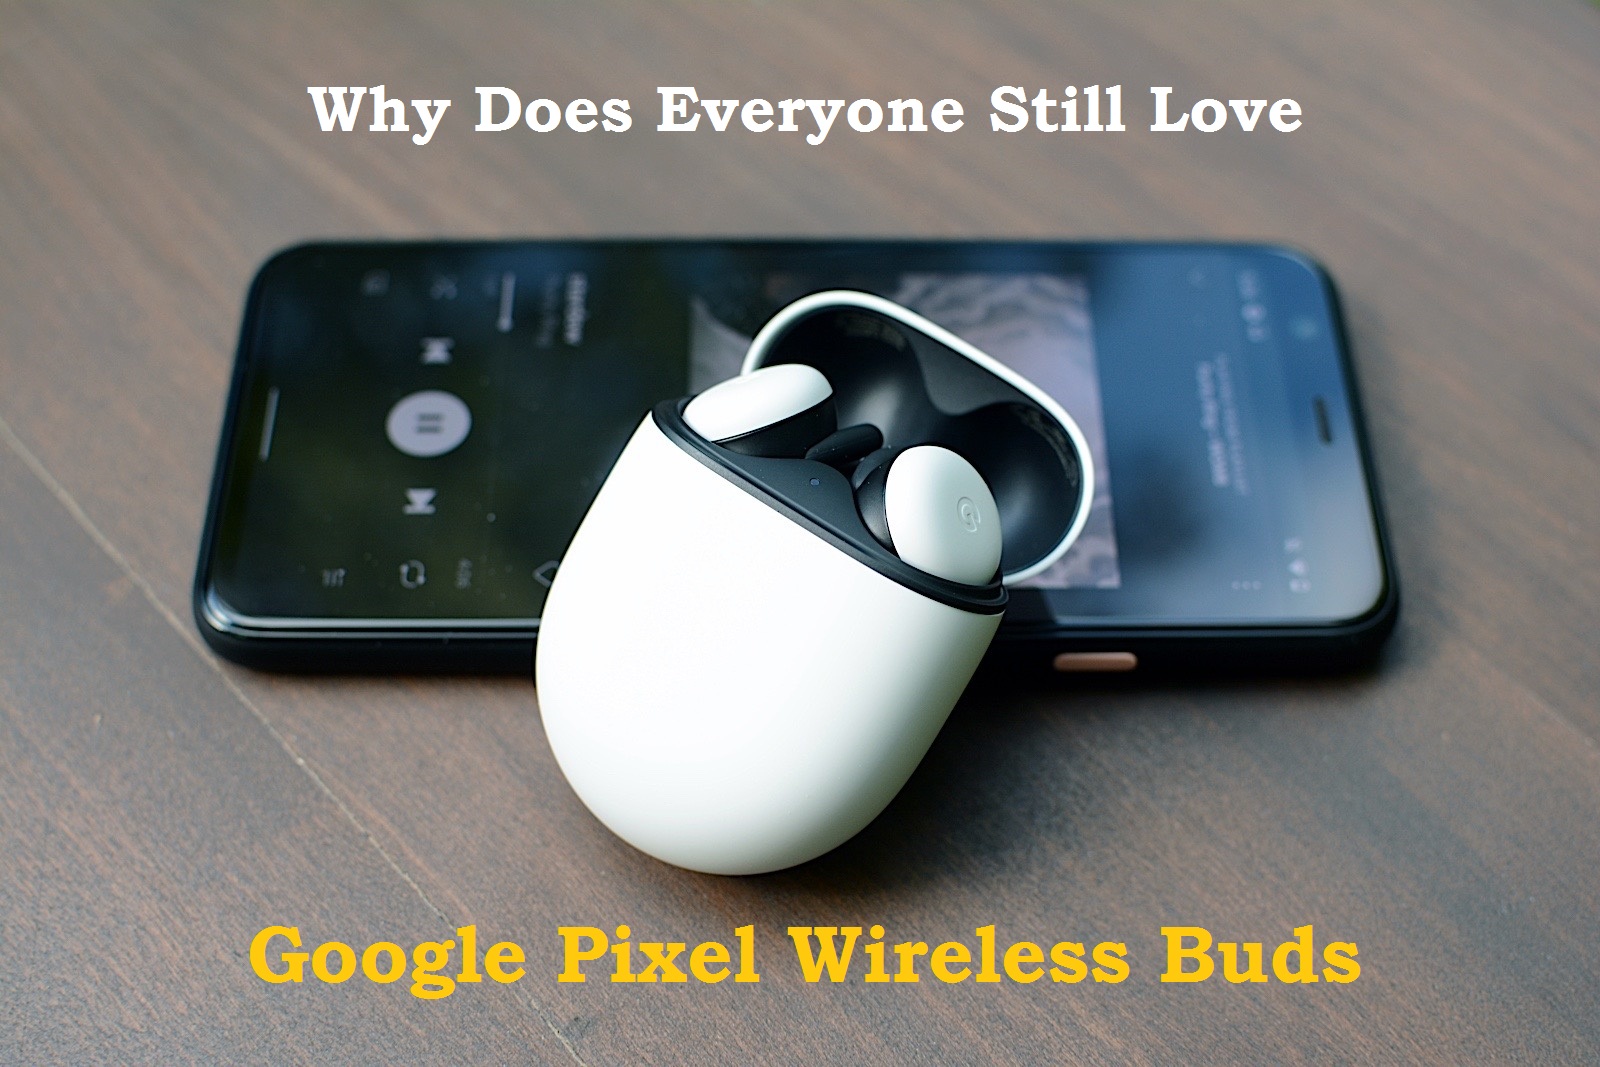 Why Does Everyone Still Love Google Pixel Wireless Buds Even After 2 Months? – karen jodes blog